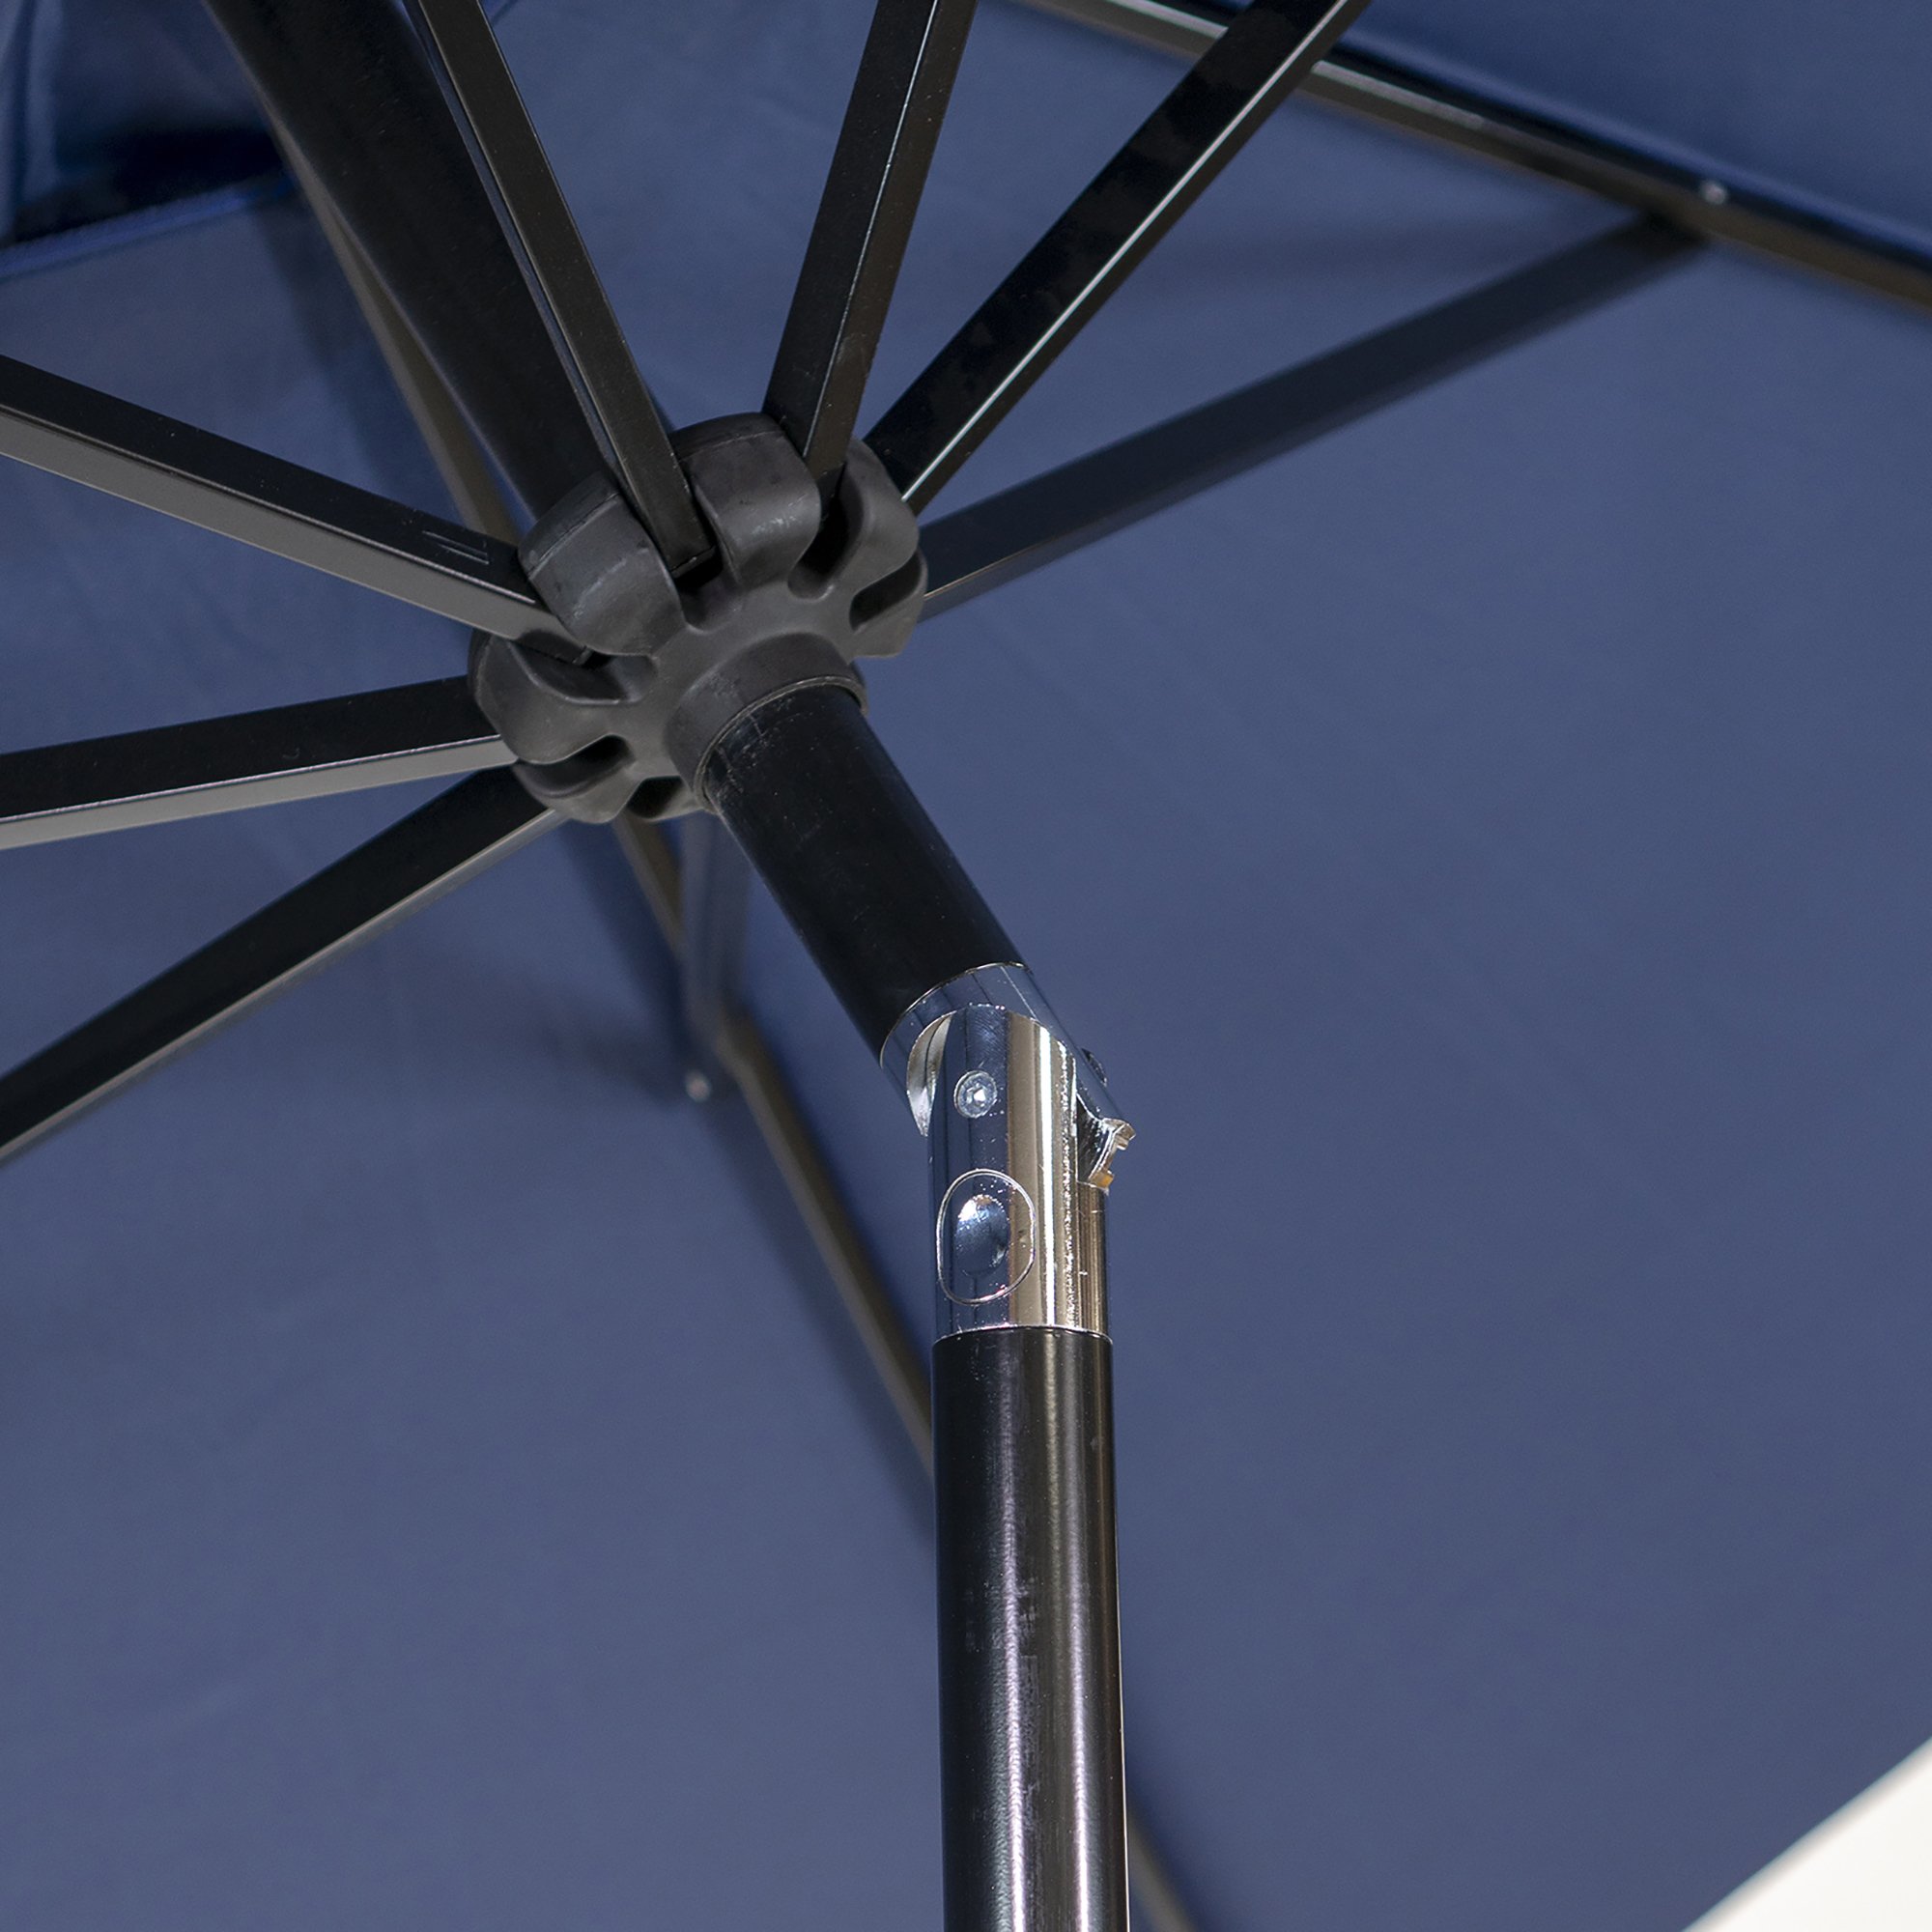 Uplion 10FT Waterproof Outdoor Garden Patio Umbrella With Tilt Sun Umbrella Parasols